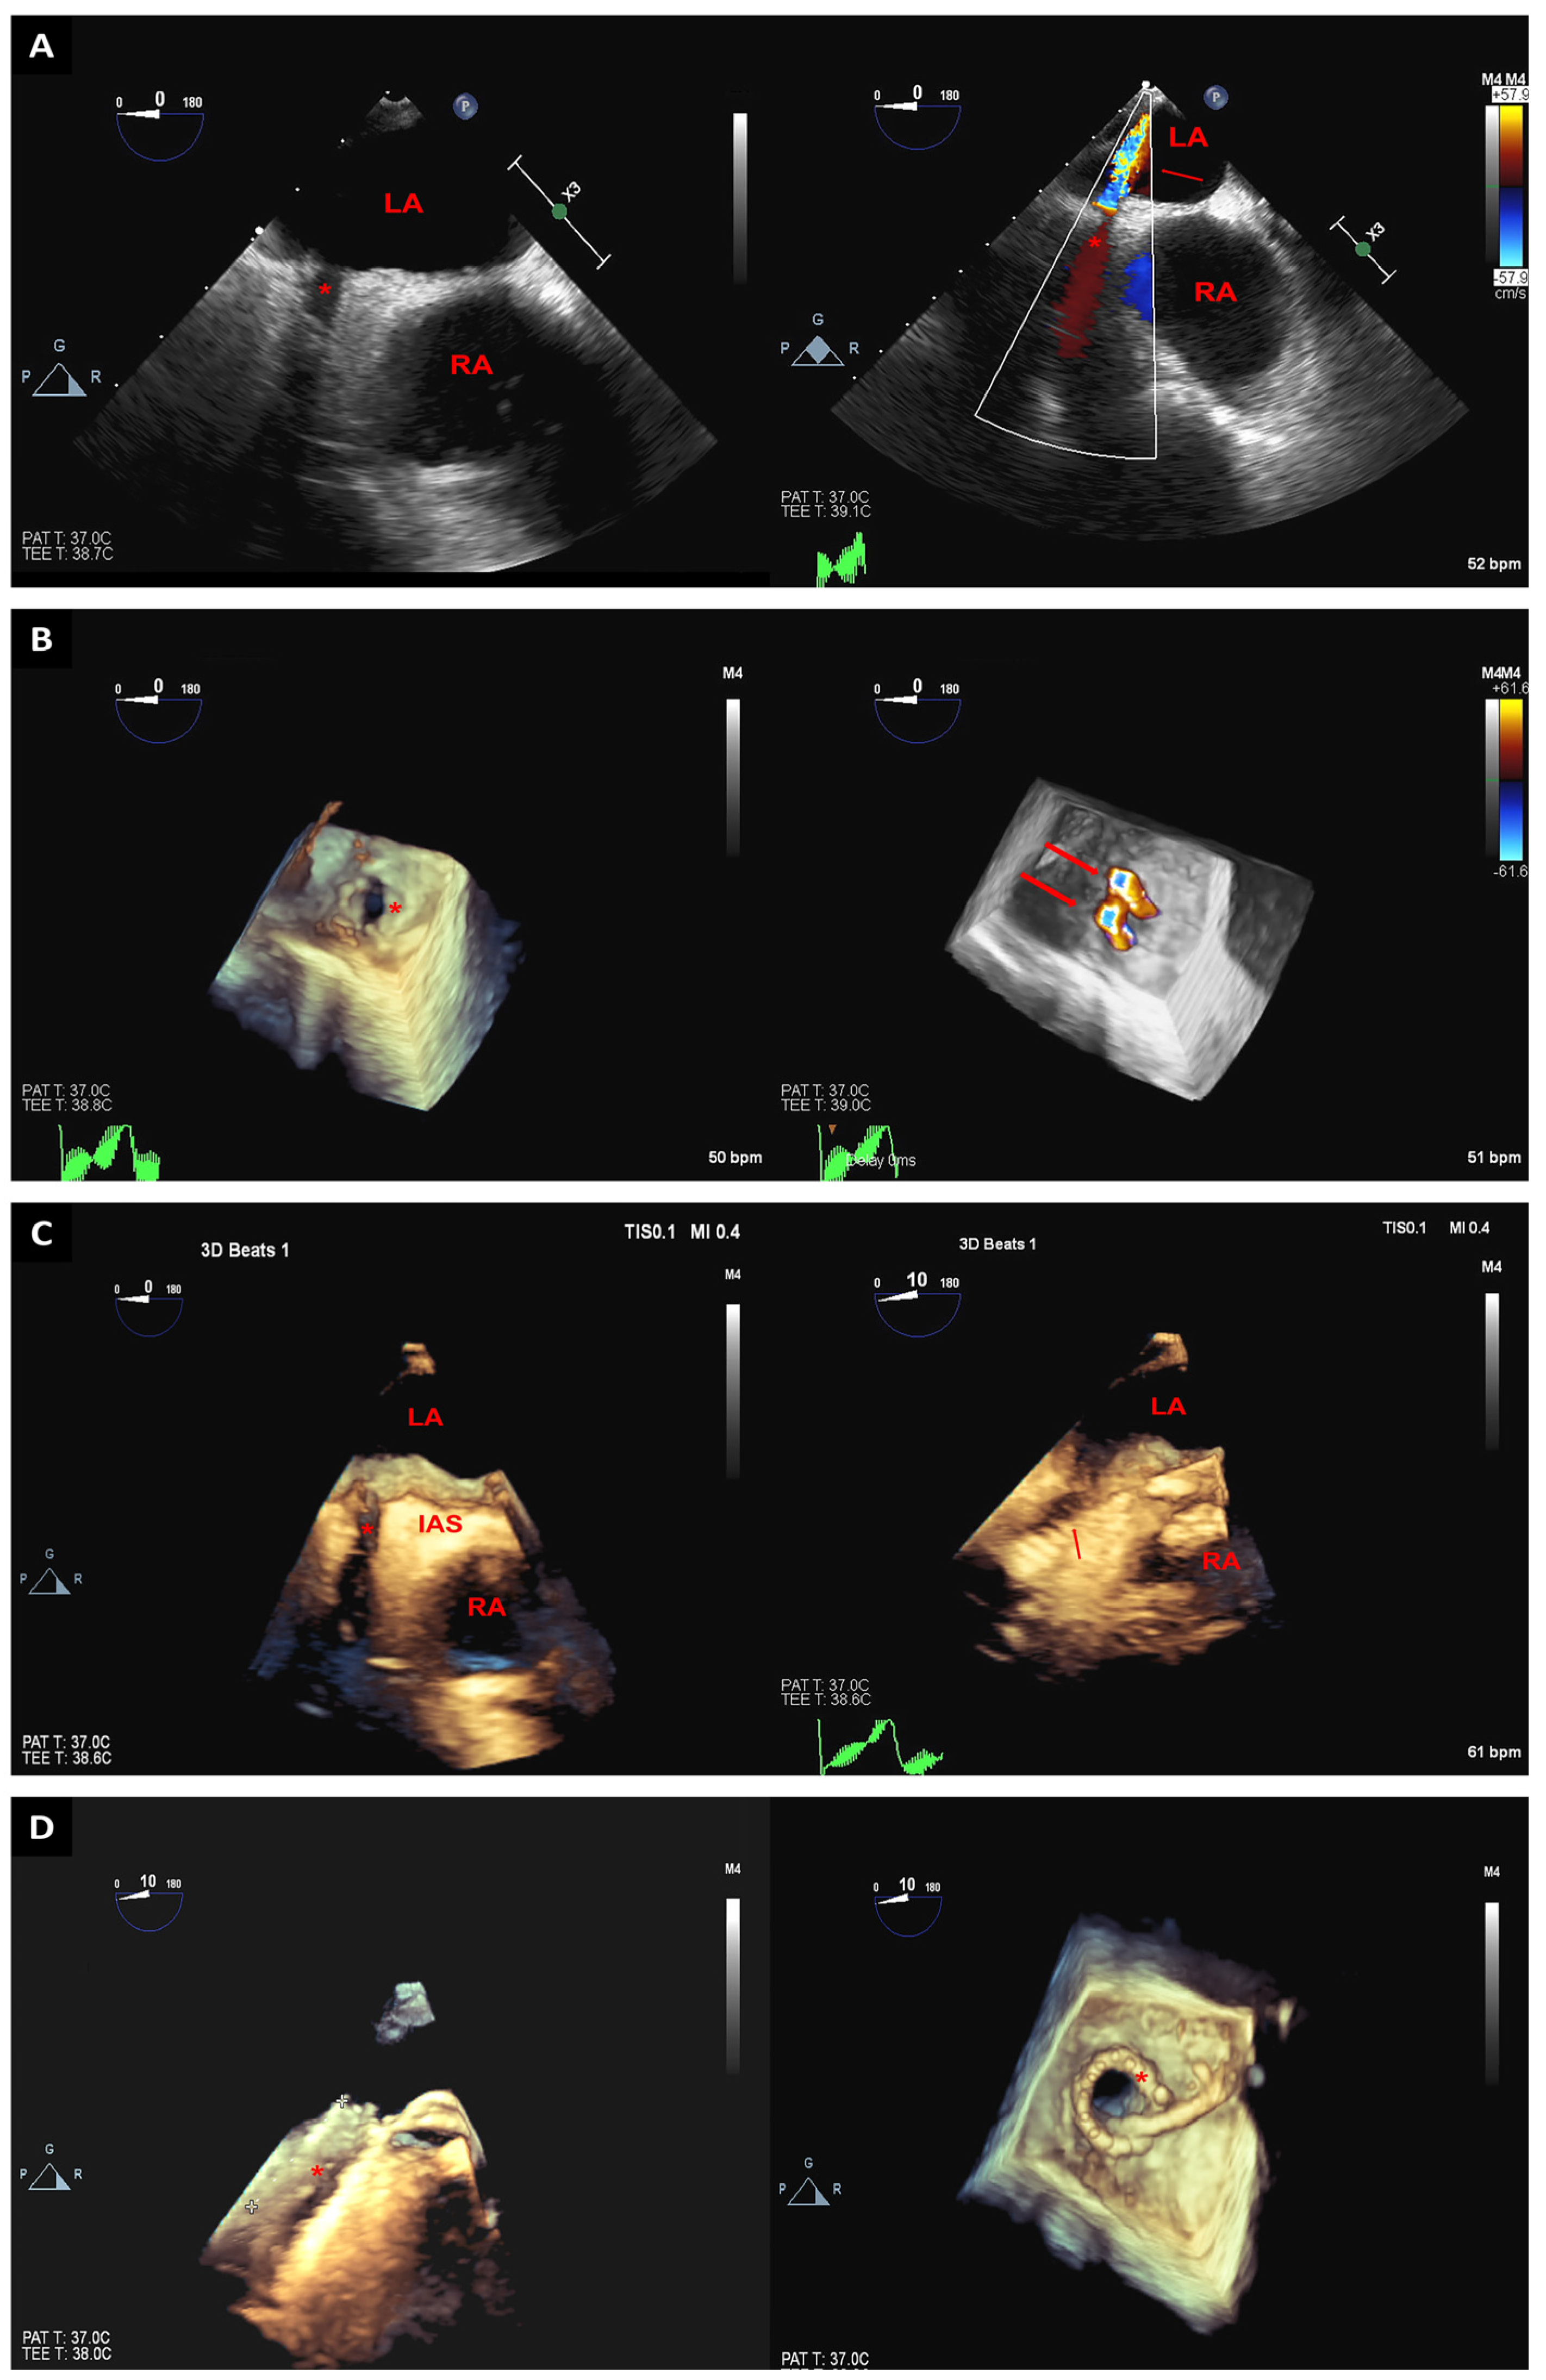 Virtual TEE: Standard Views, Cardiac, Transesophageal Echocardiography, 3D  Heart Model, Education